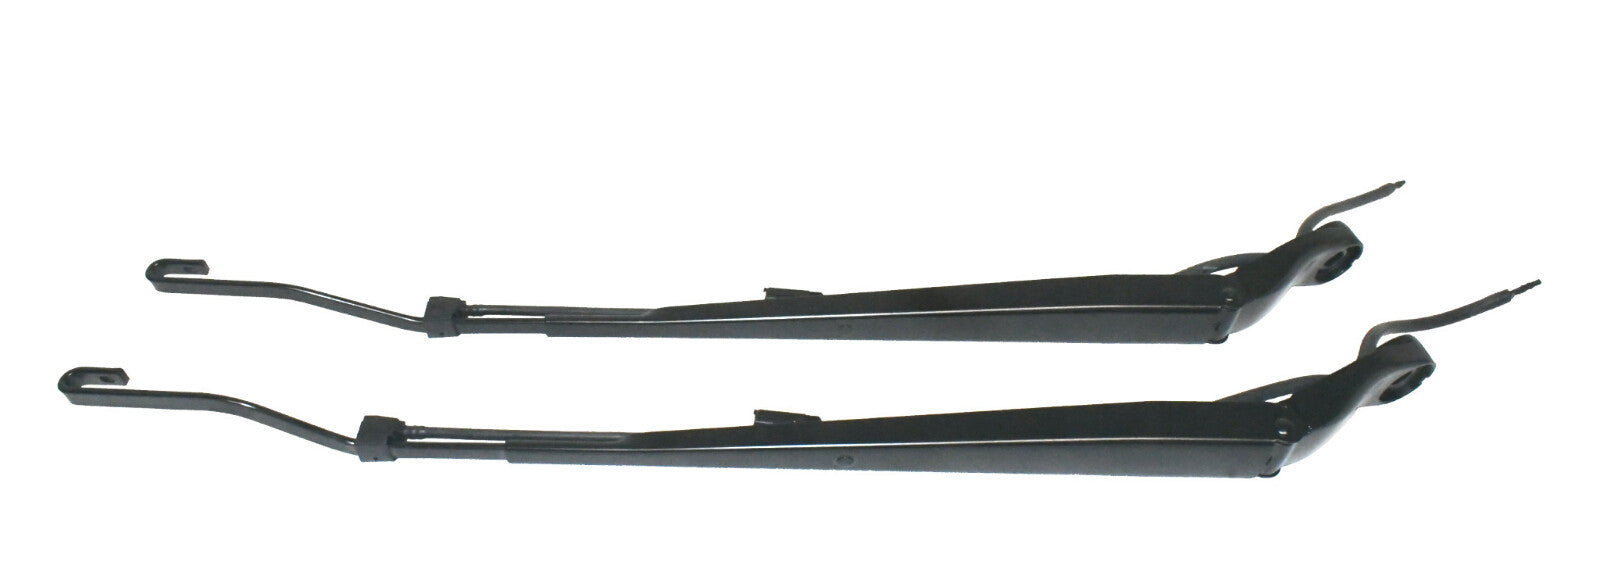 New pair of genuine GM wiper arms for Sierra, Silverado, Suburban, Tahoe, Yukon Avalanche and Escalade 22917501 22917502